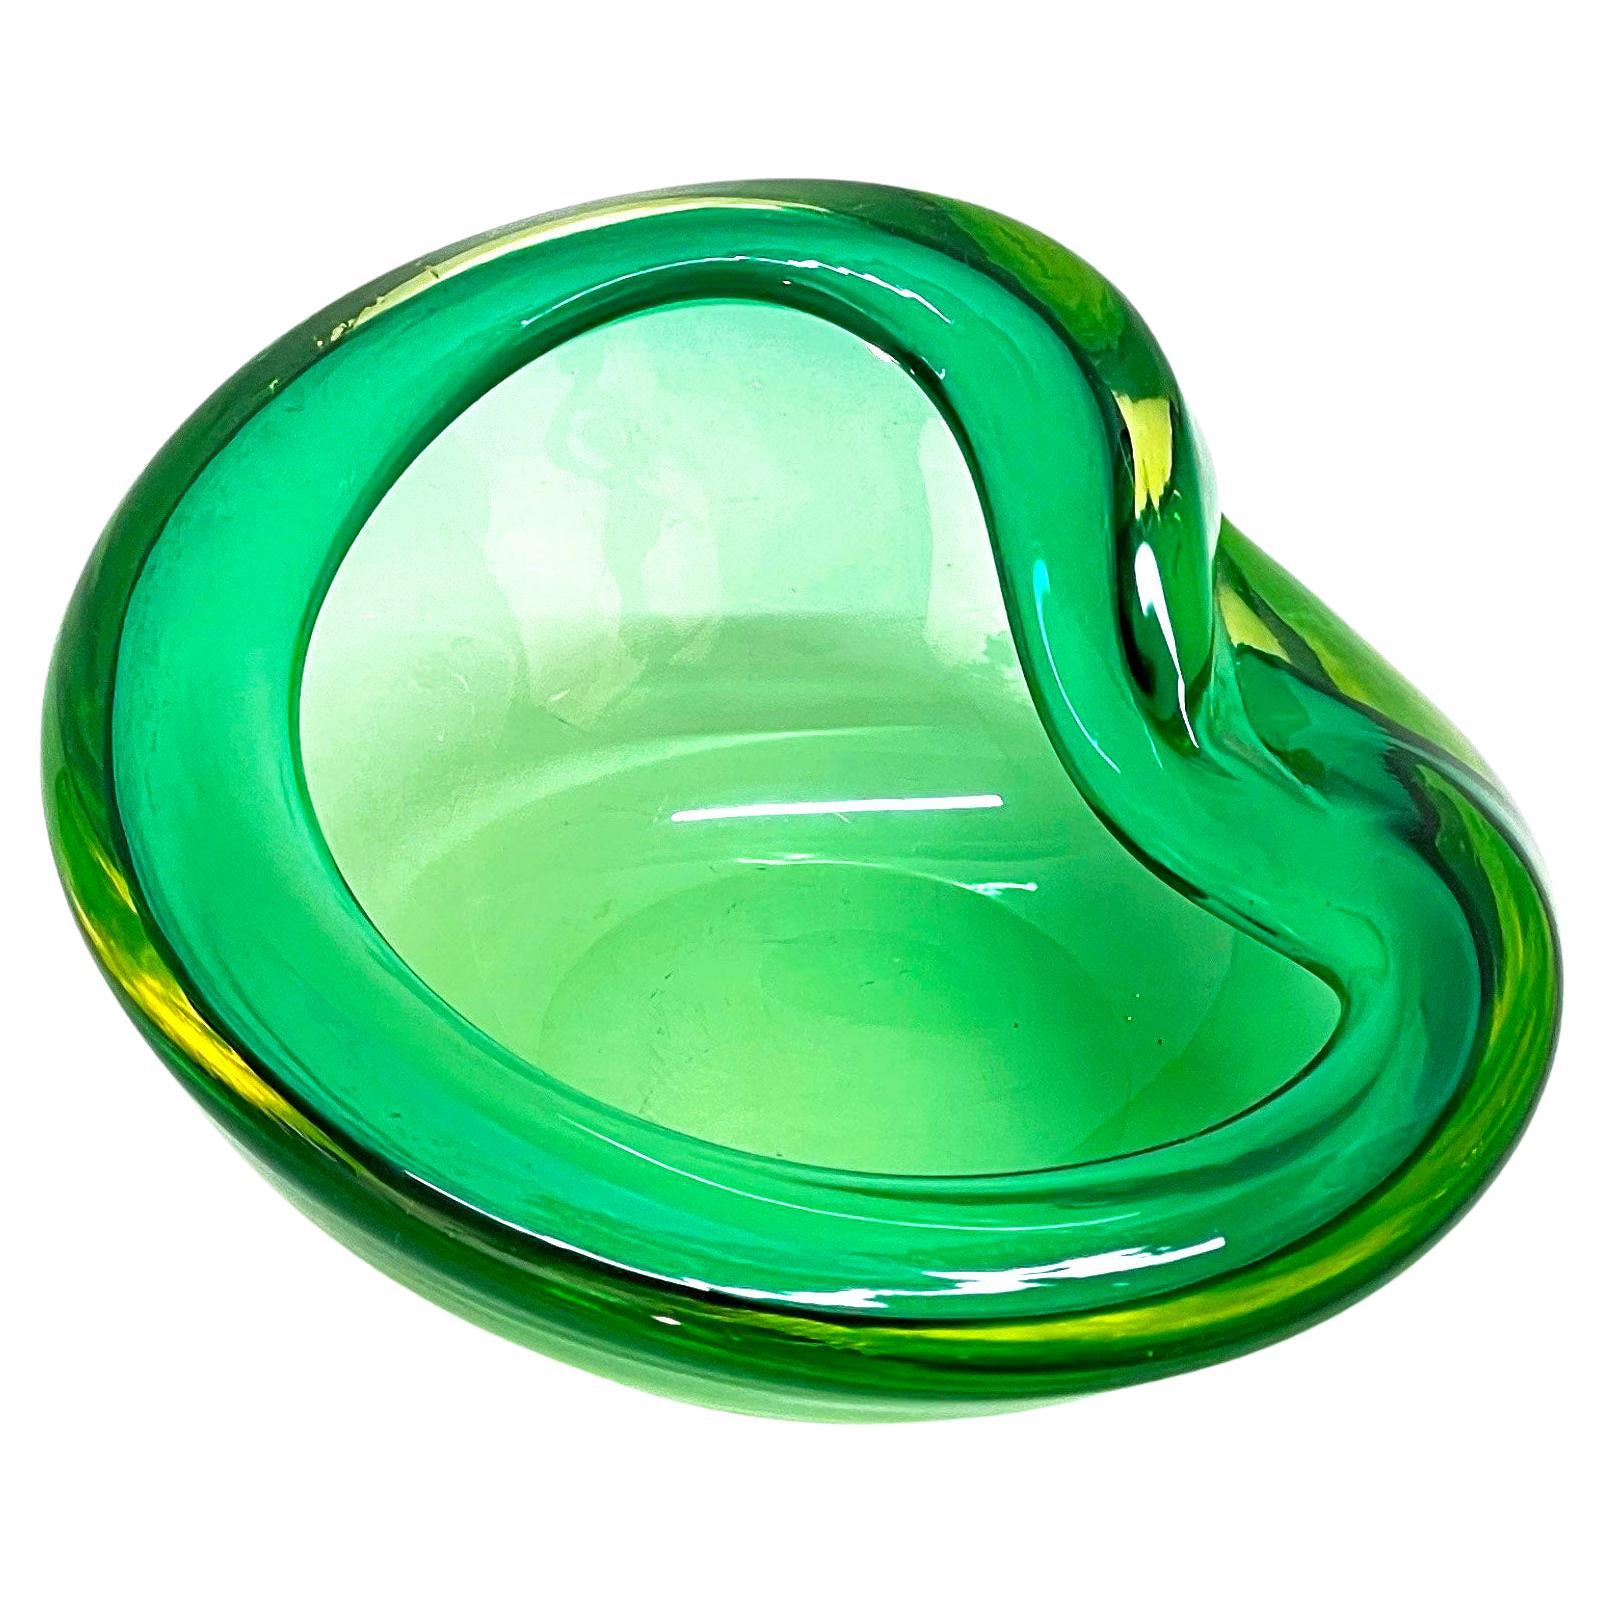 Toso Midcentury Green "Sommerso" Murano Glass Italian Decorative Bowl, 1960s